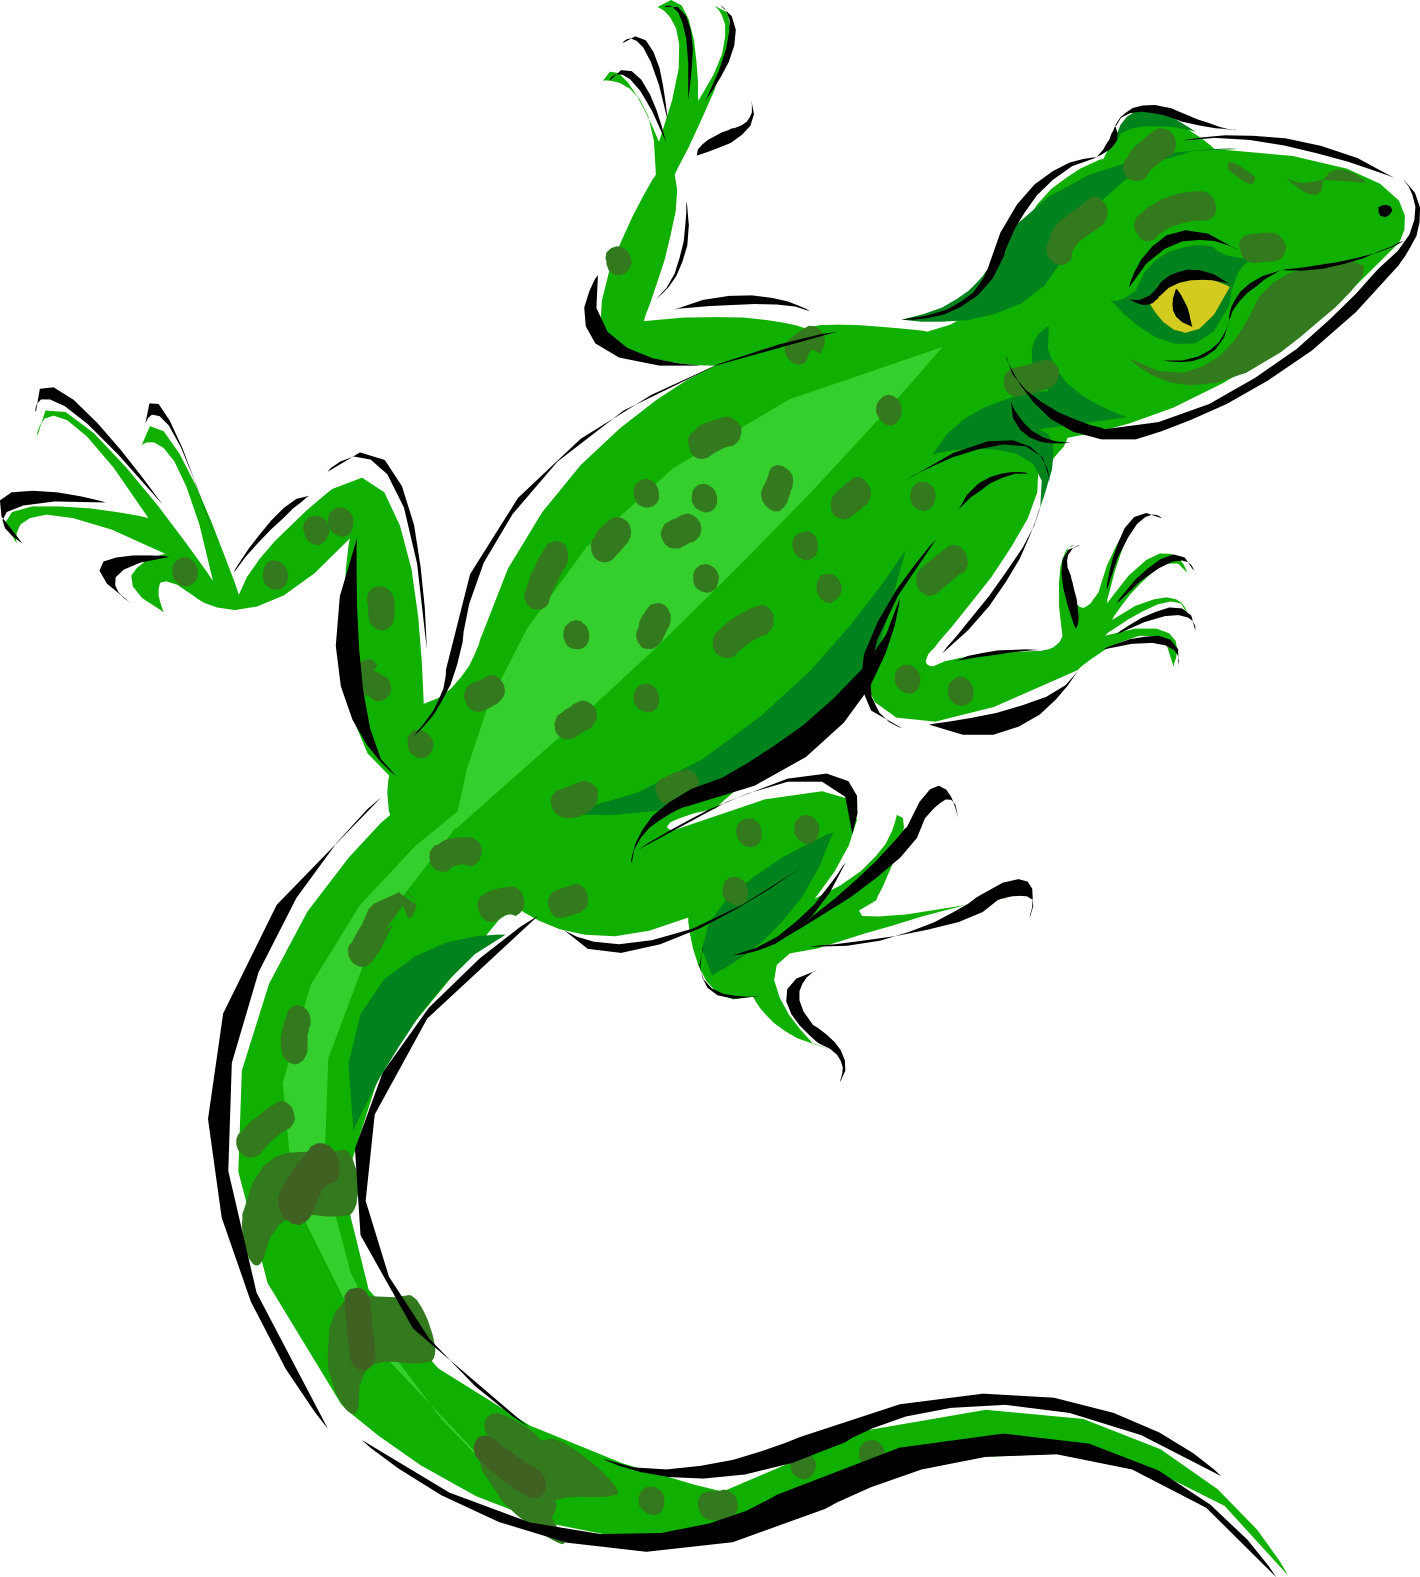 A Green Lizard With Black Spots